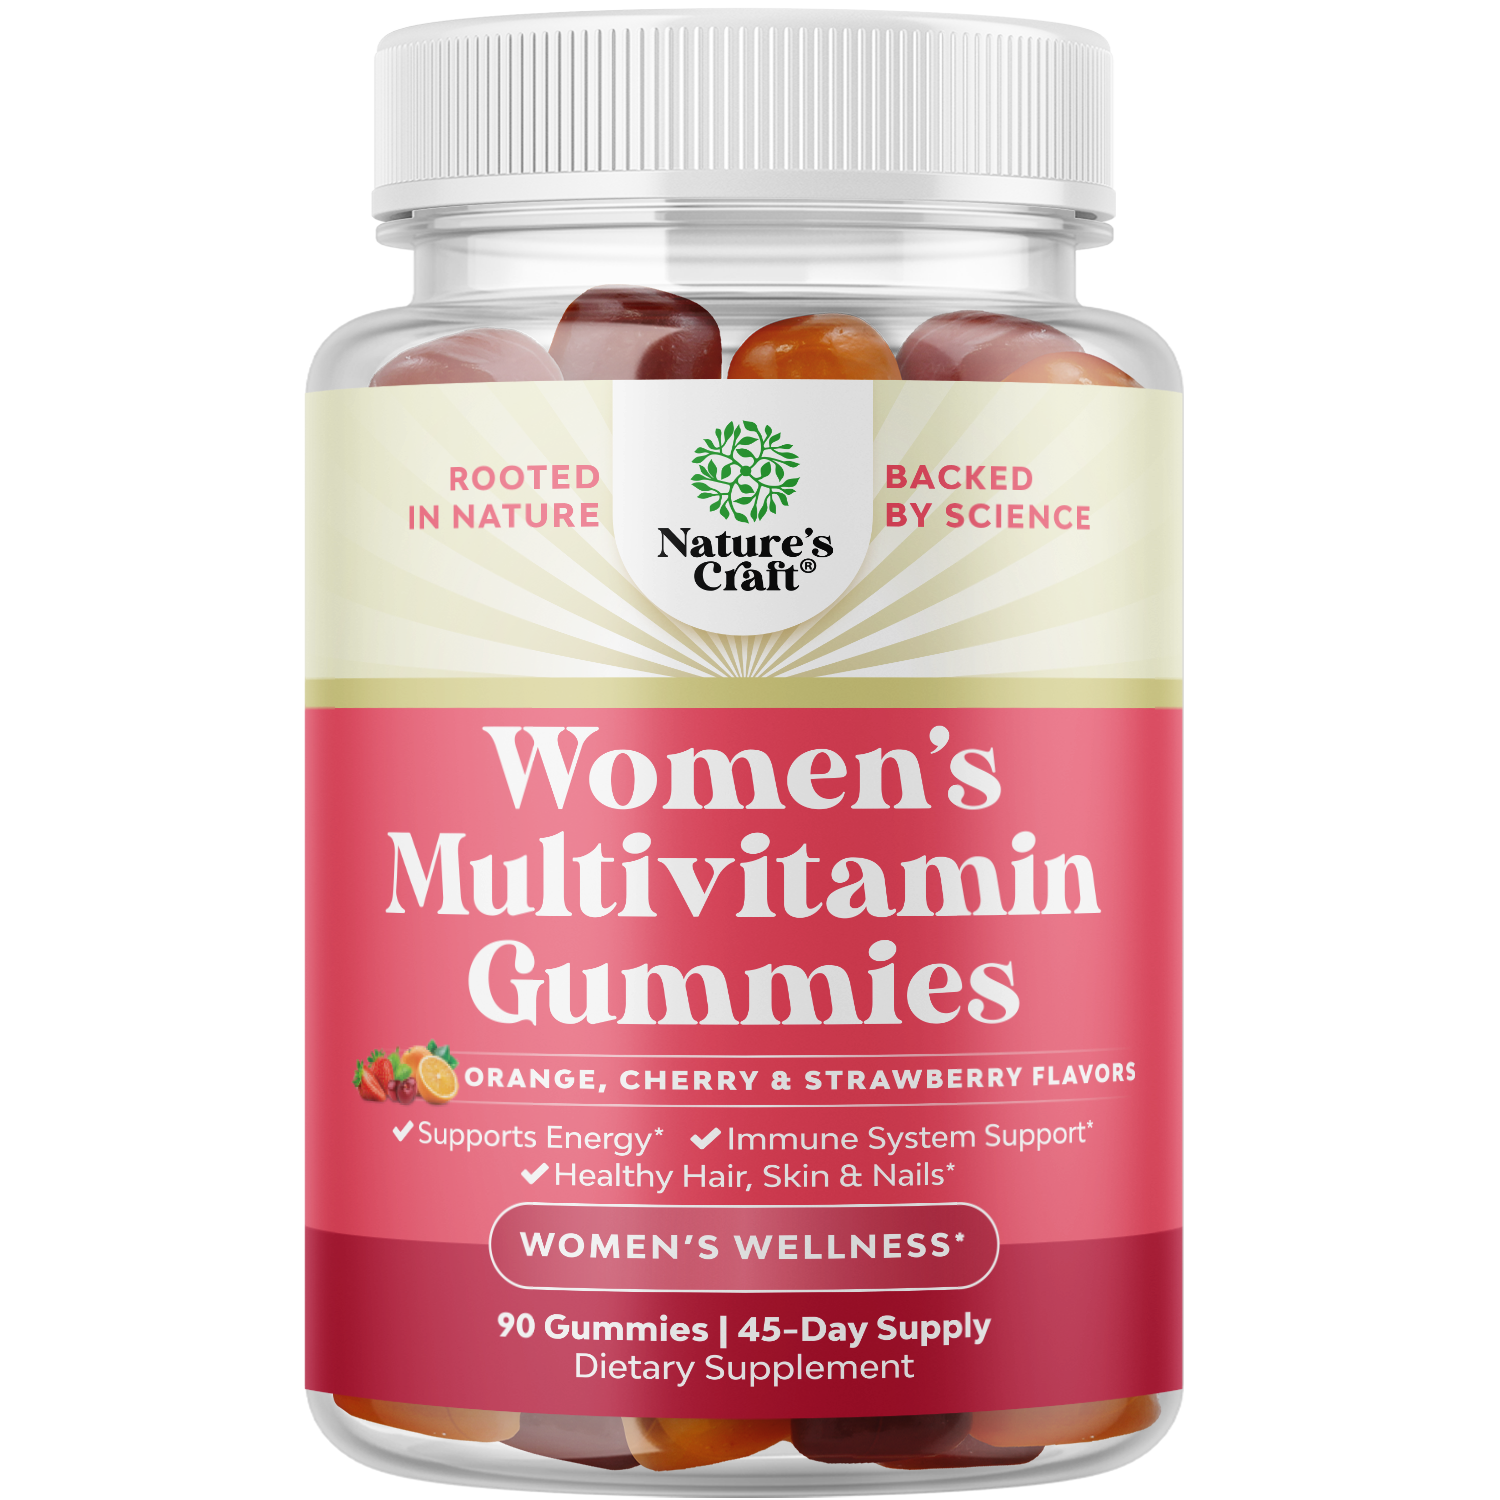 Delicious Natural Multivitamin for Women Gummies - 90ct